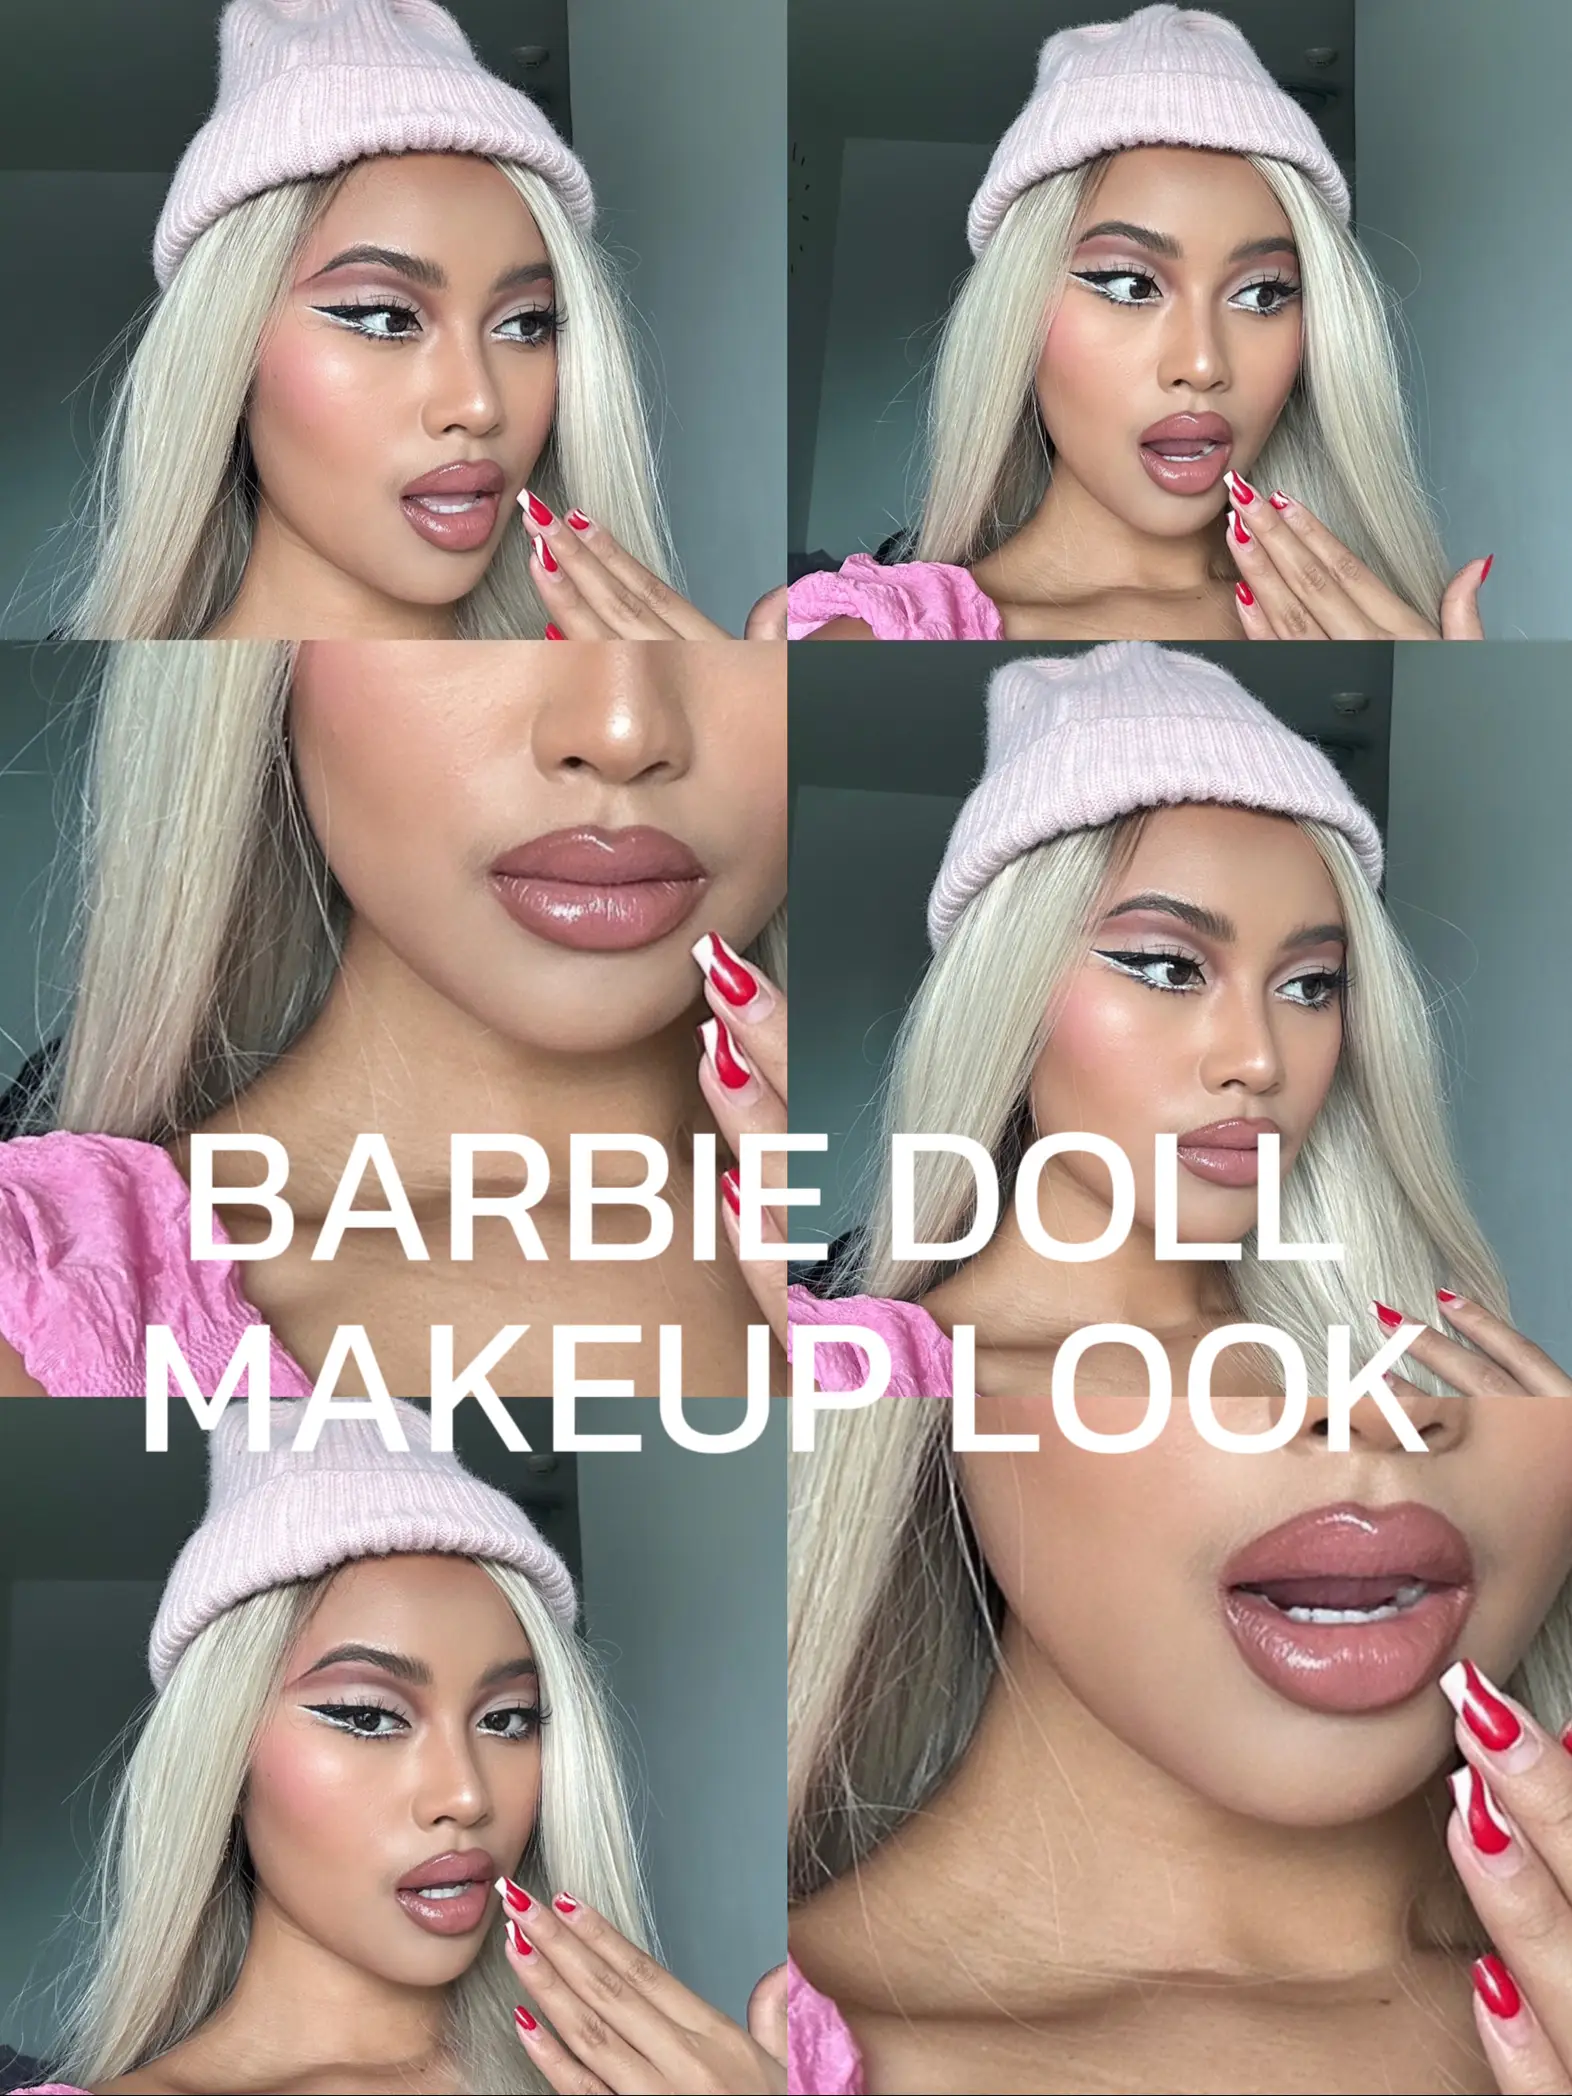 Barbie Doll Makeup Look มาแรงขนาดน